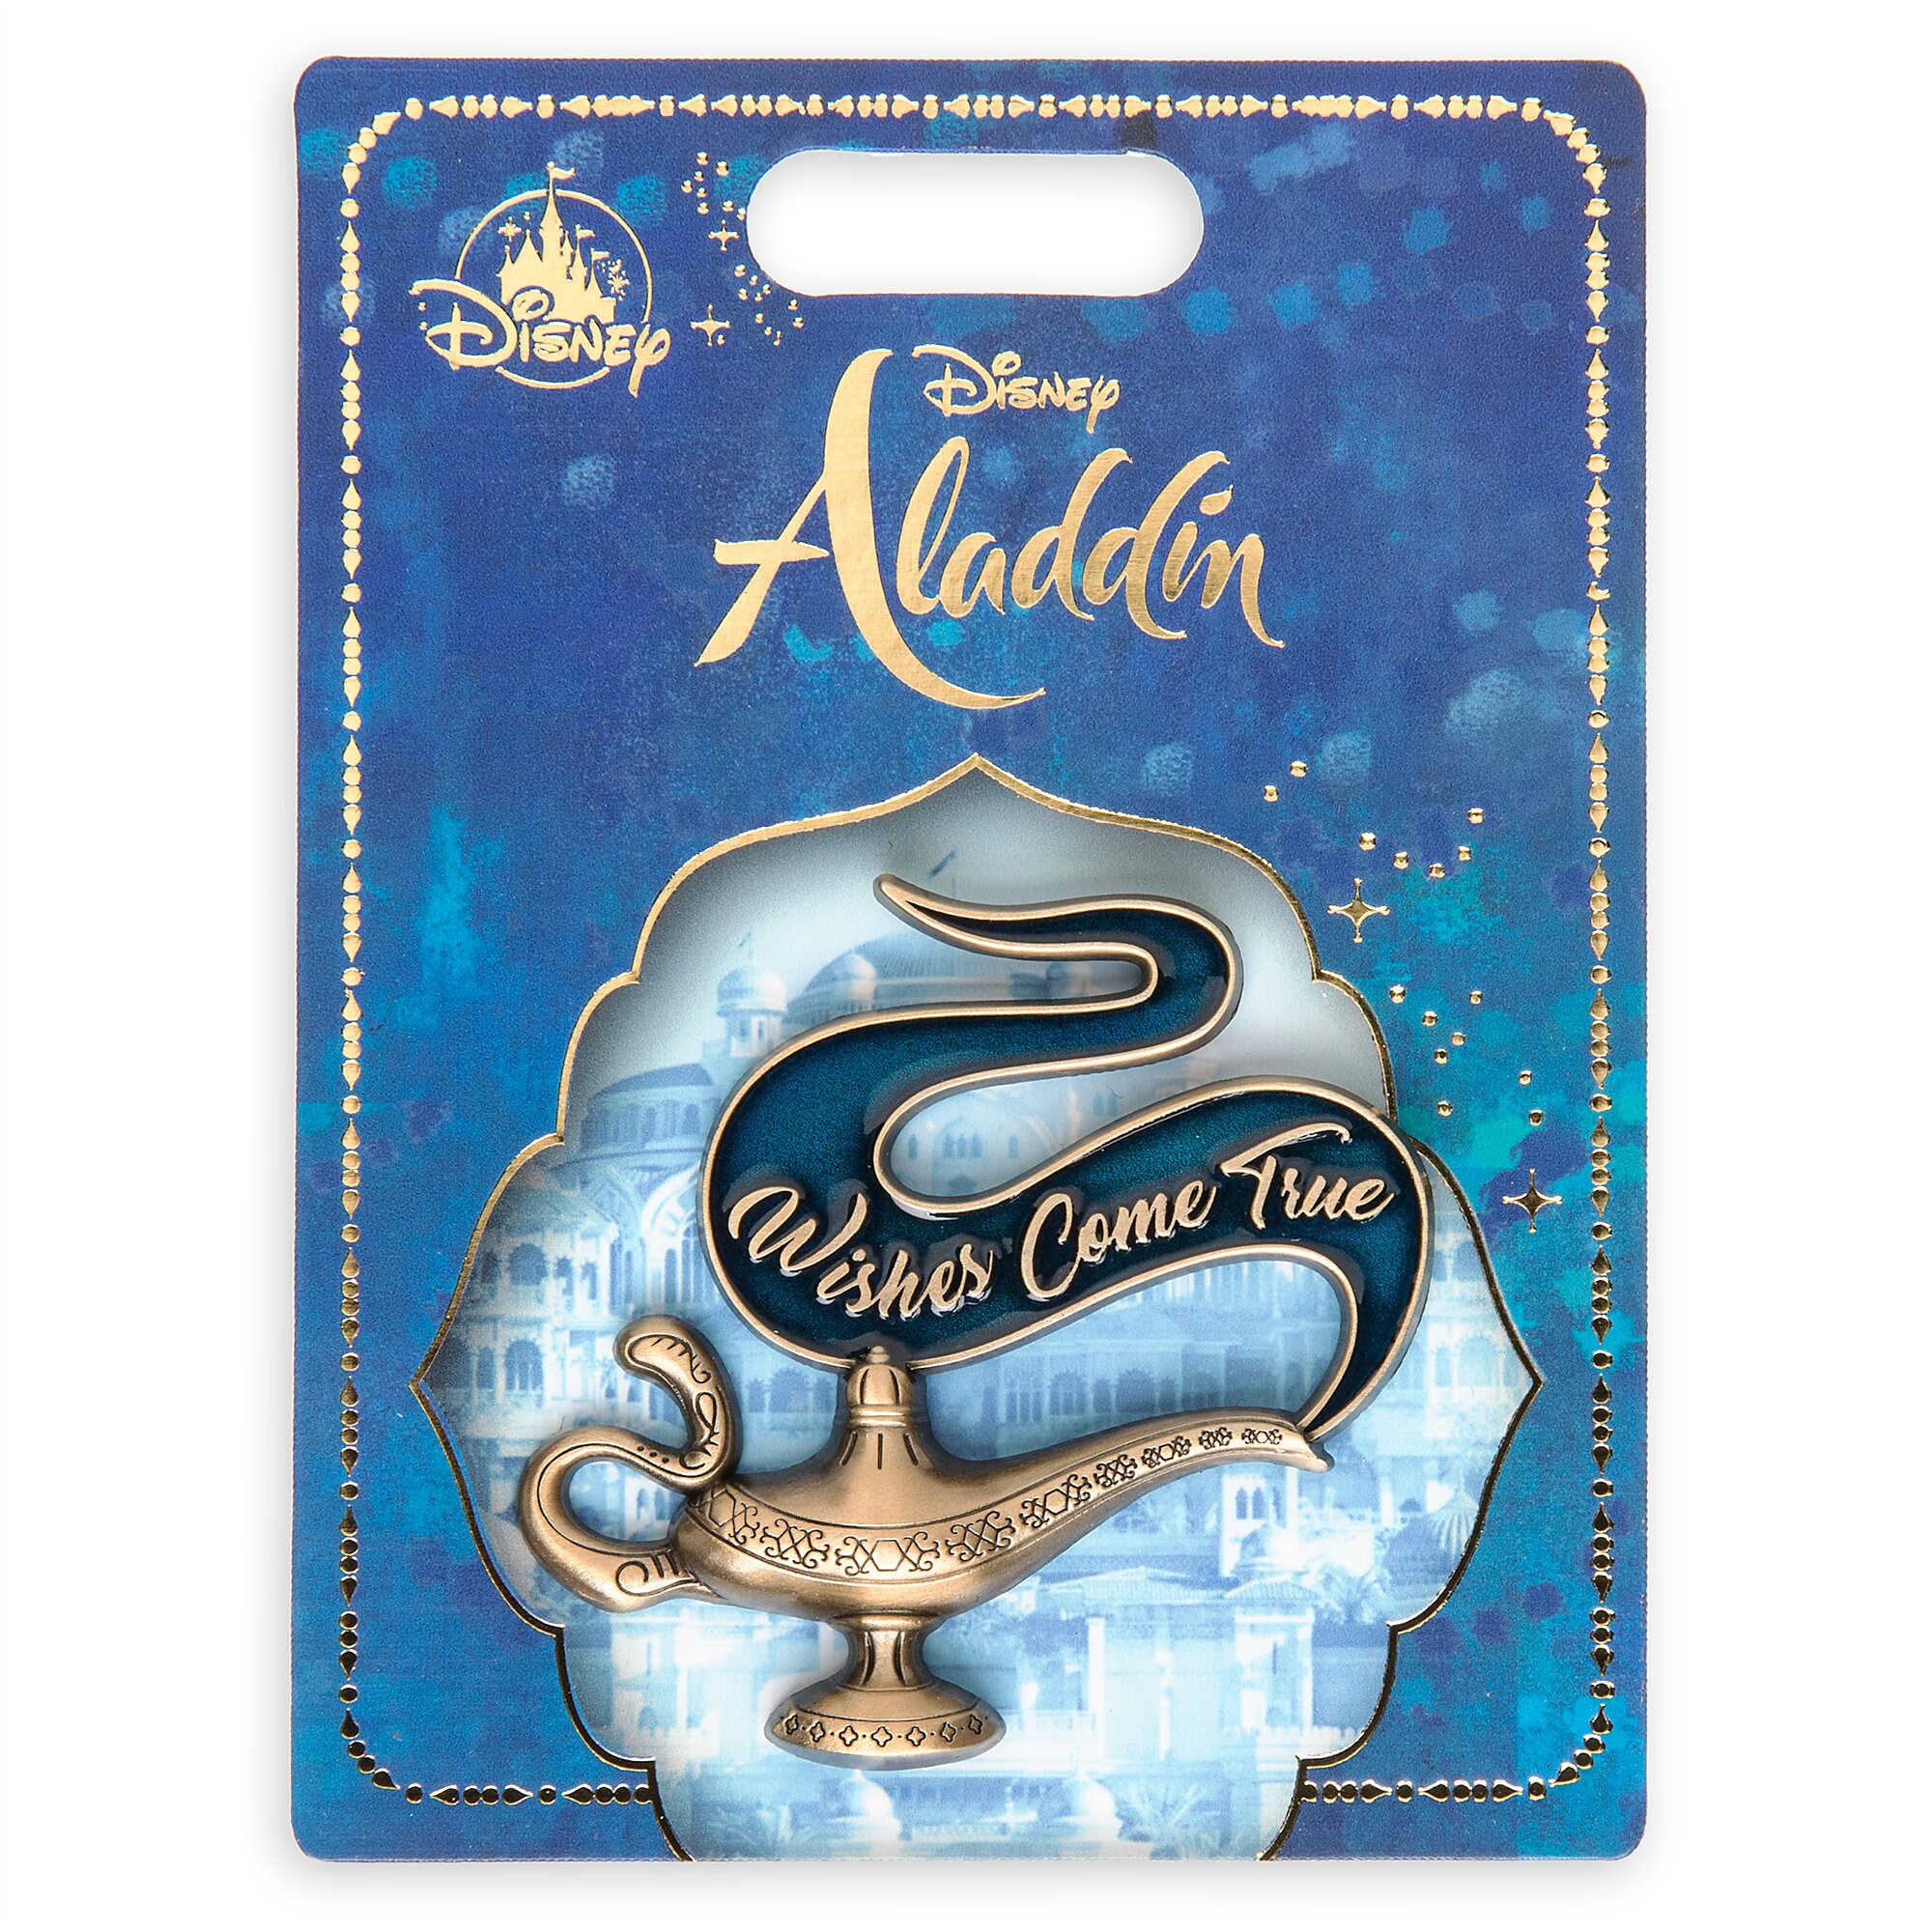 Genie Lamp Pin - Aladdin - Live Action Film